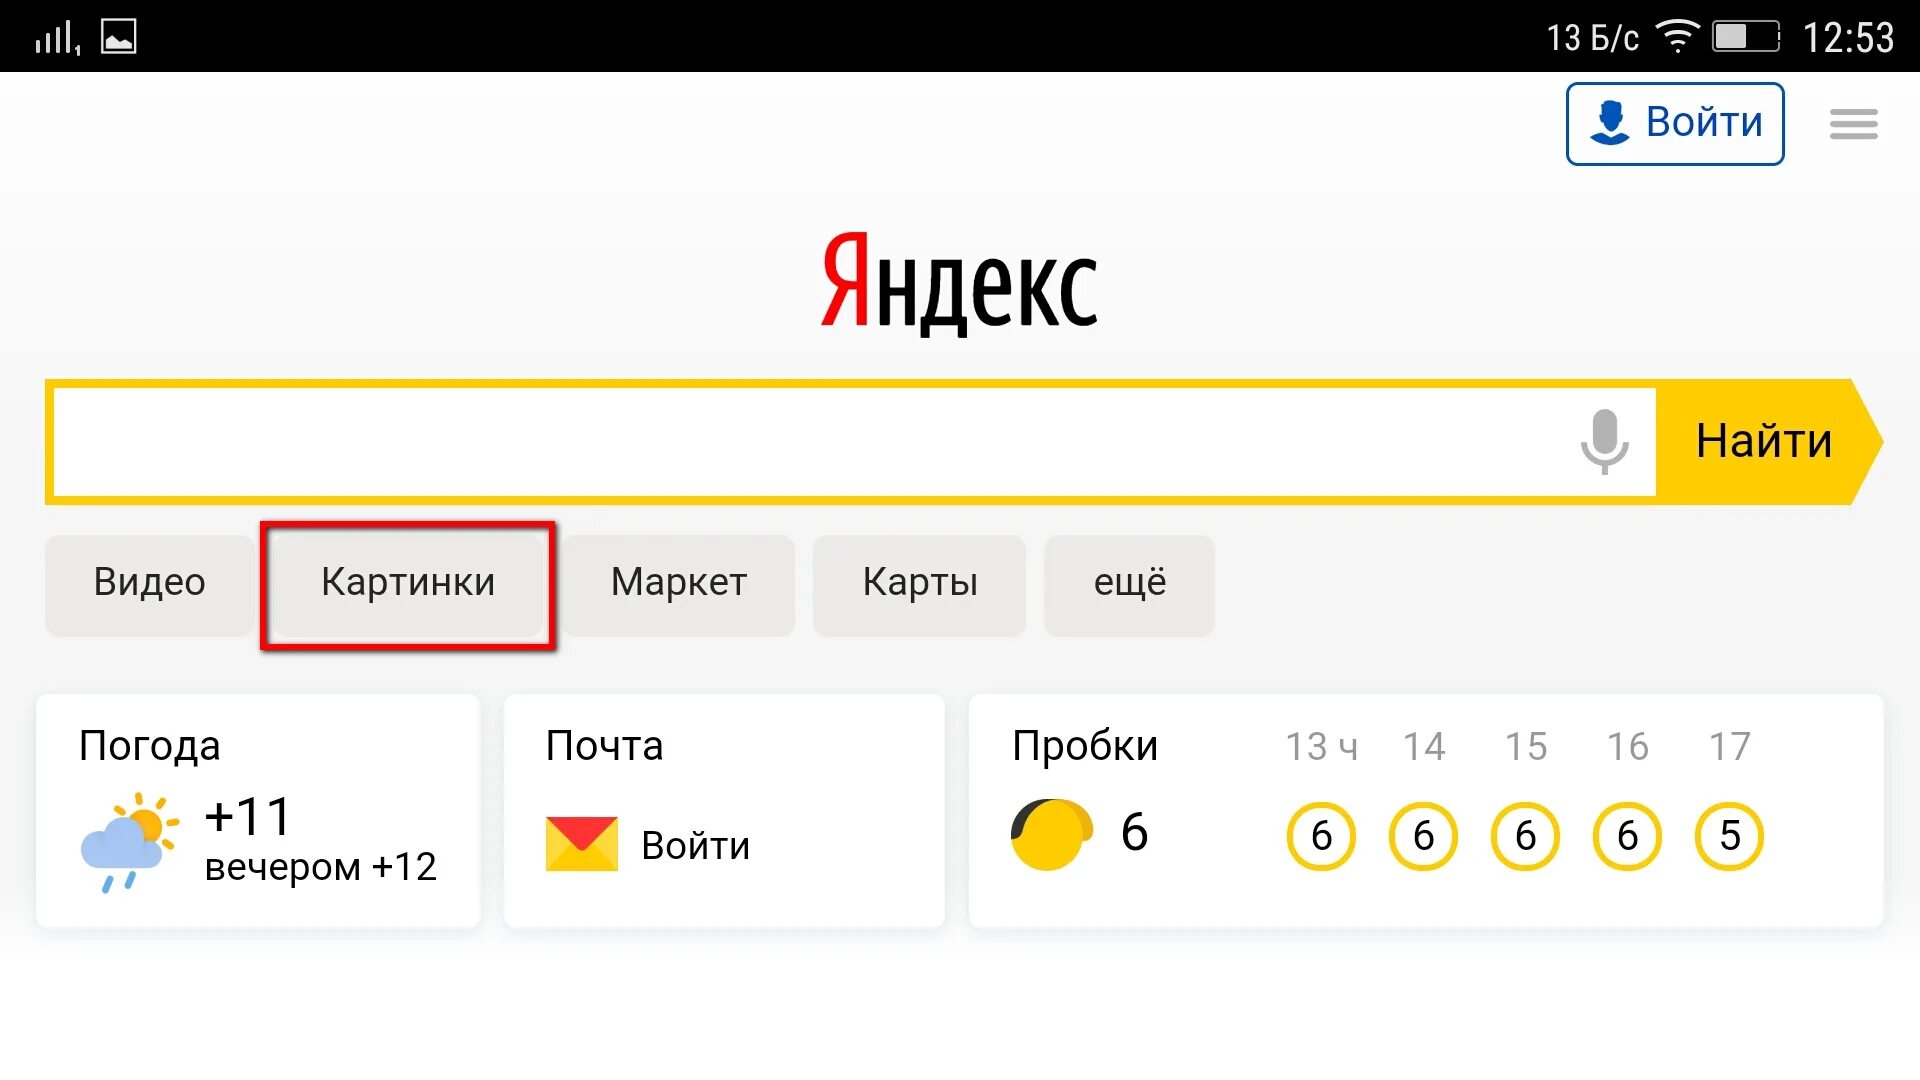 Найти по картинке в яндексе. Яндекс. Яндекс поиск. Поиск по картинке Яндекс. Искать по картинке в Яндексе.